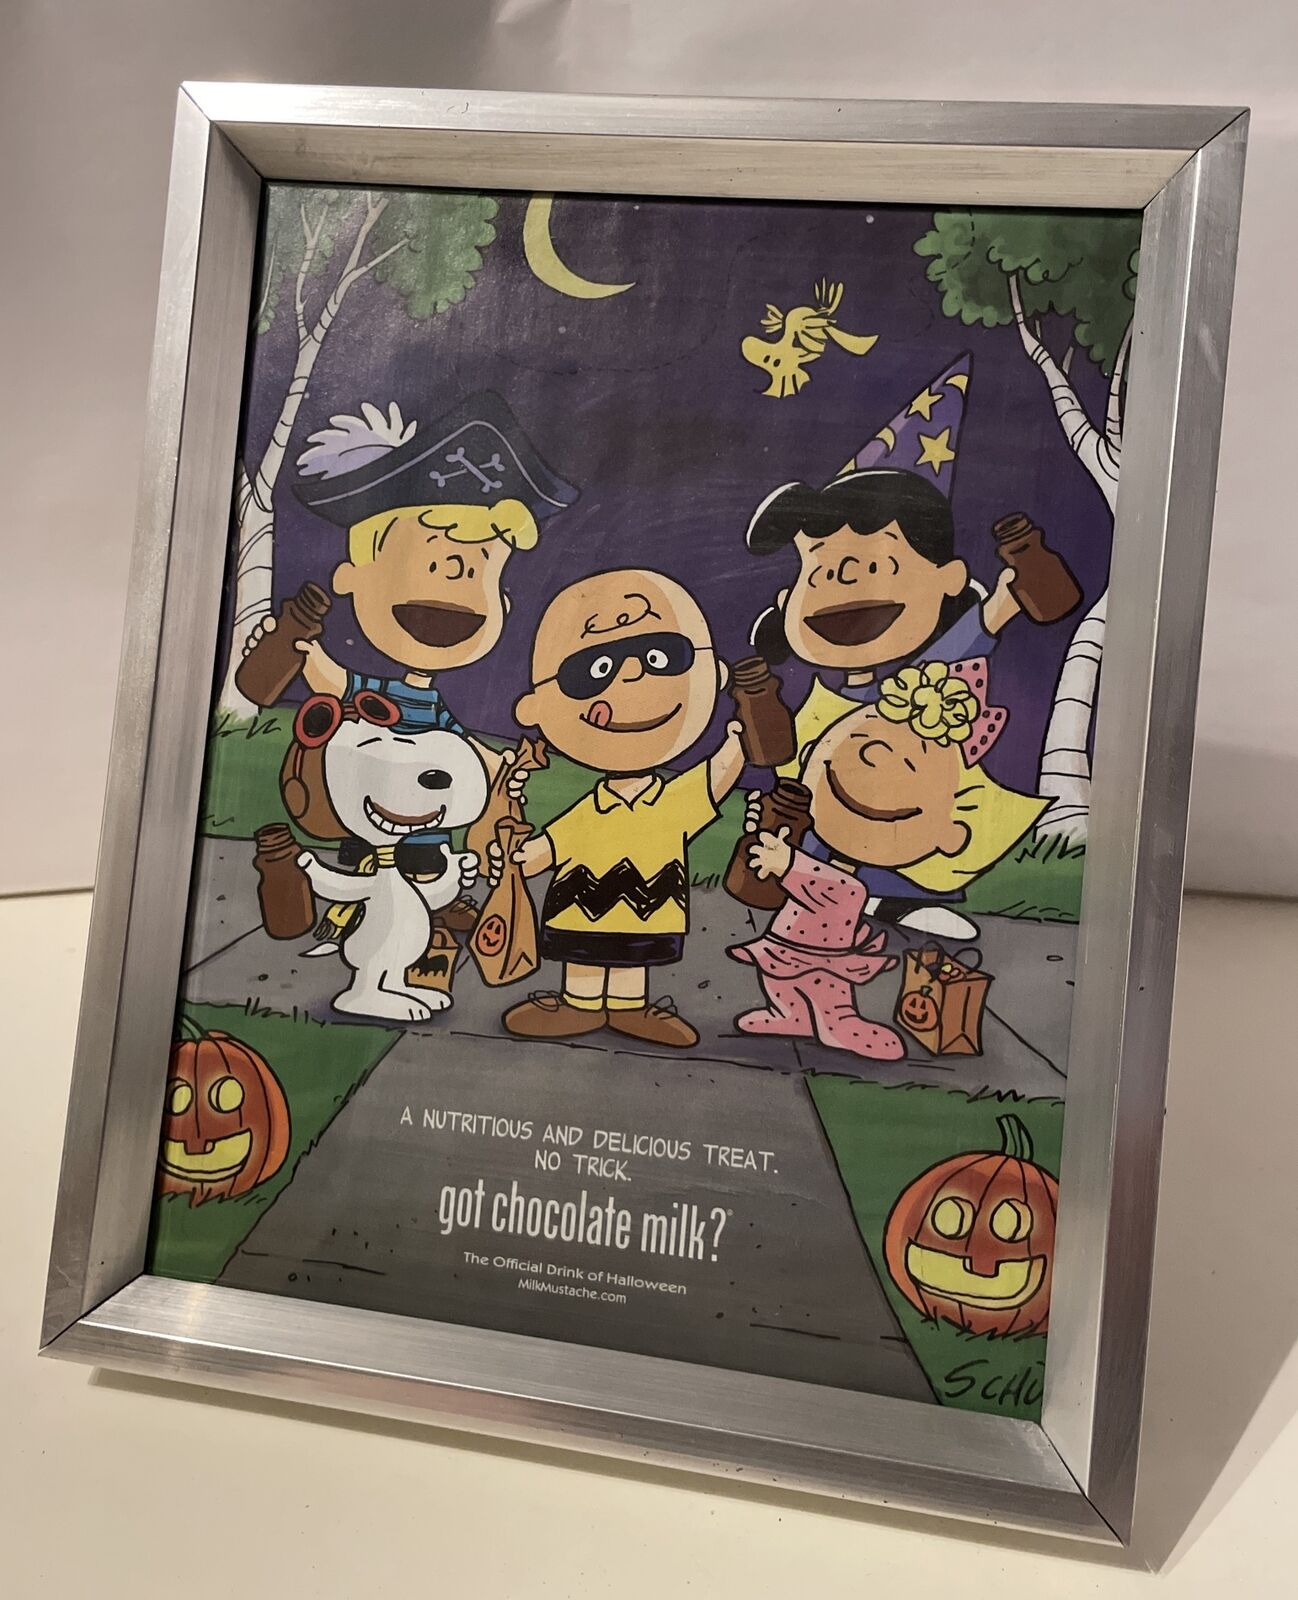 CHARLIE BROWN GREAT PUMPKIN Halloween Framed Picture “got chocolate milk” Ad